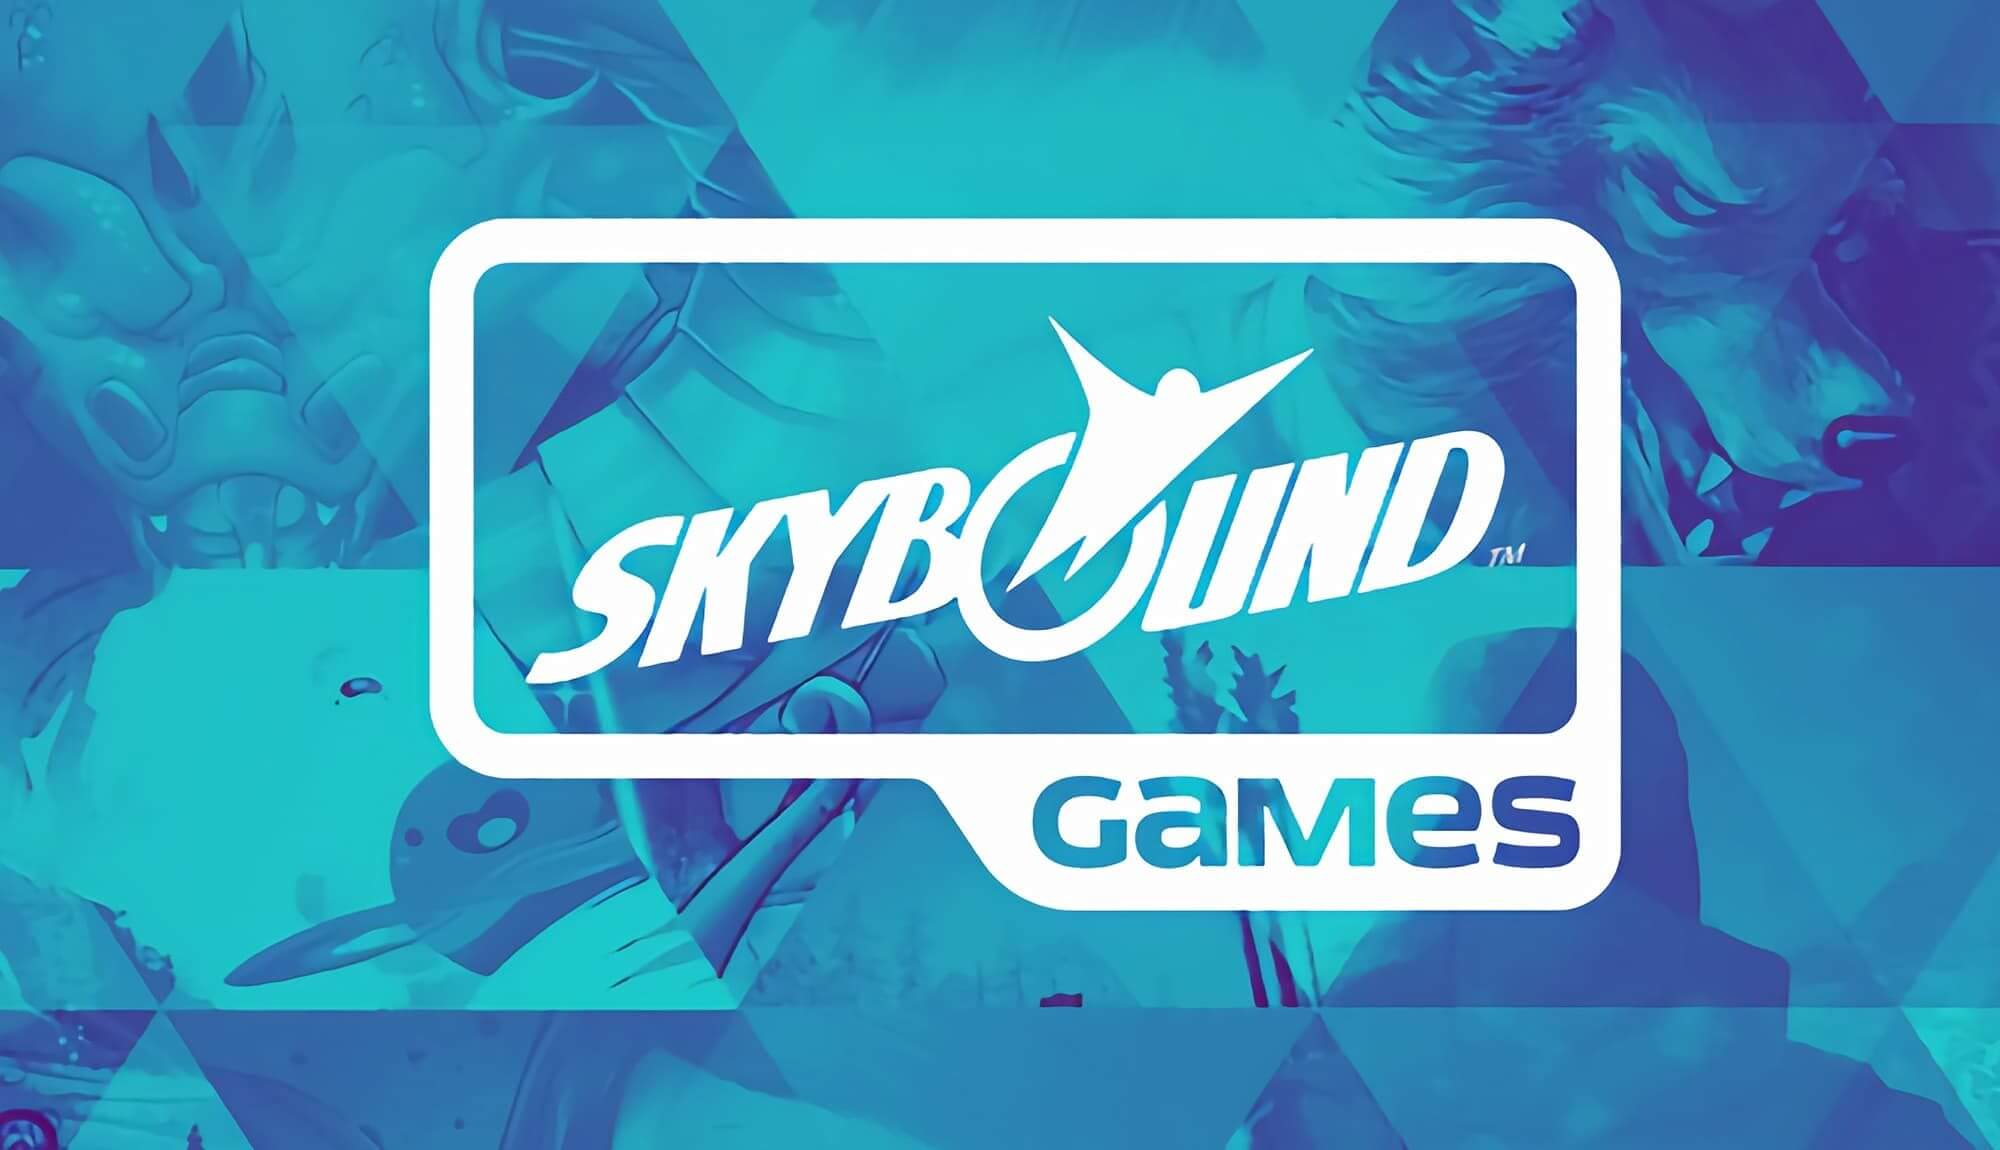 Skybound Games Logo Image